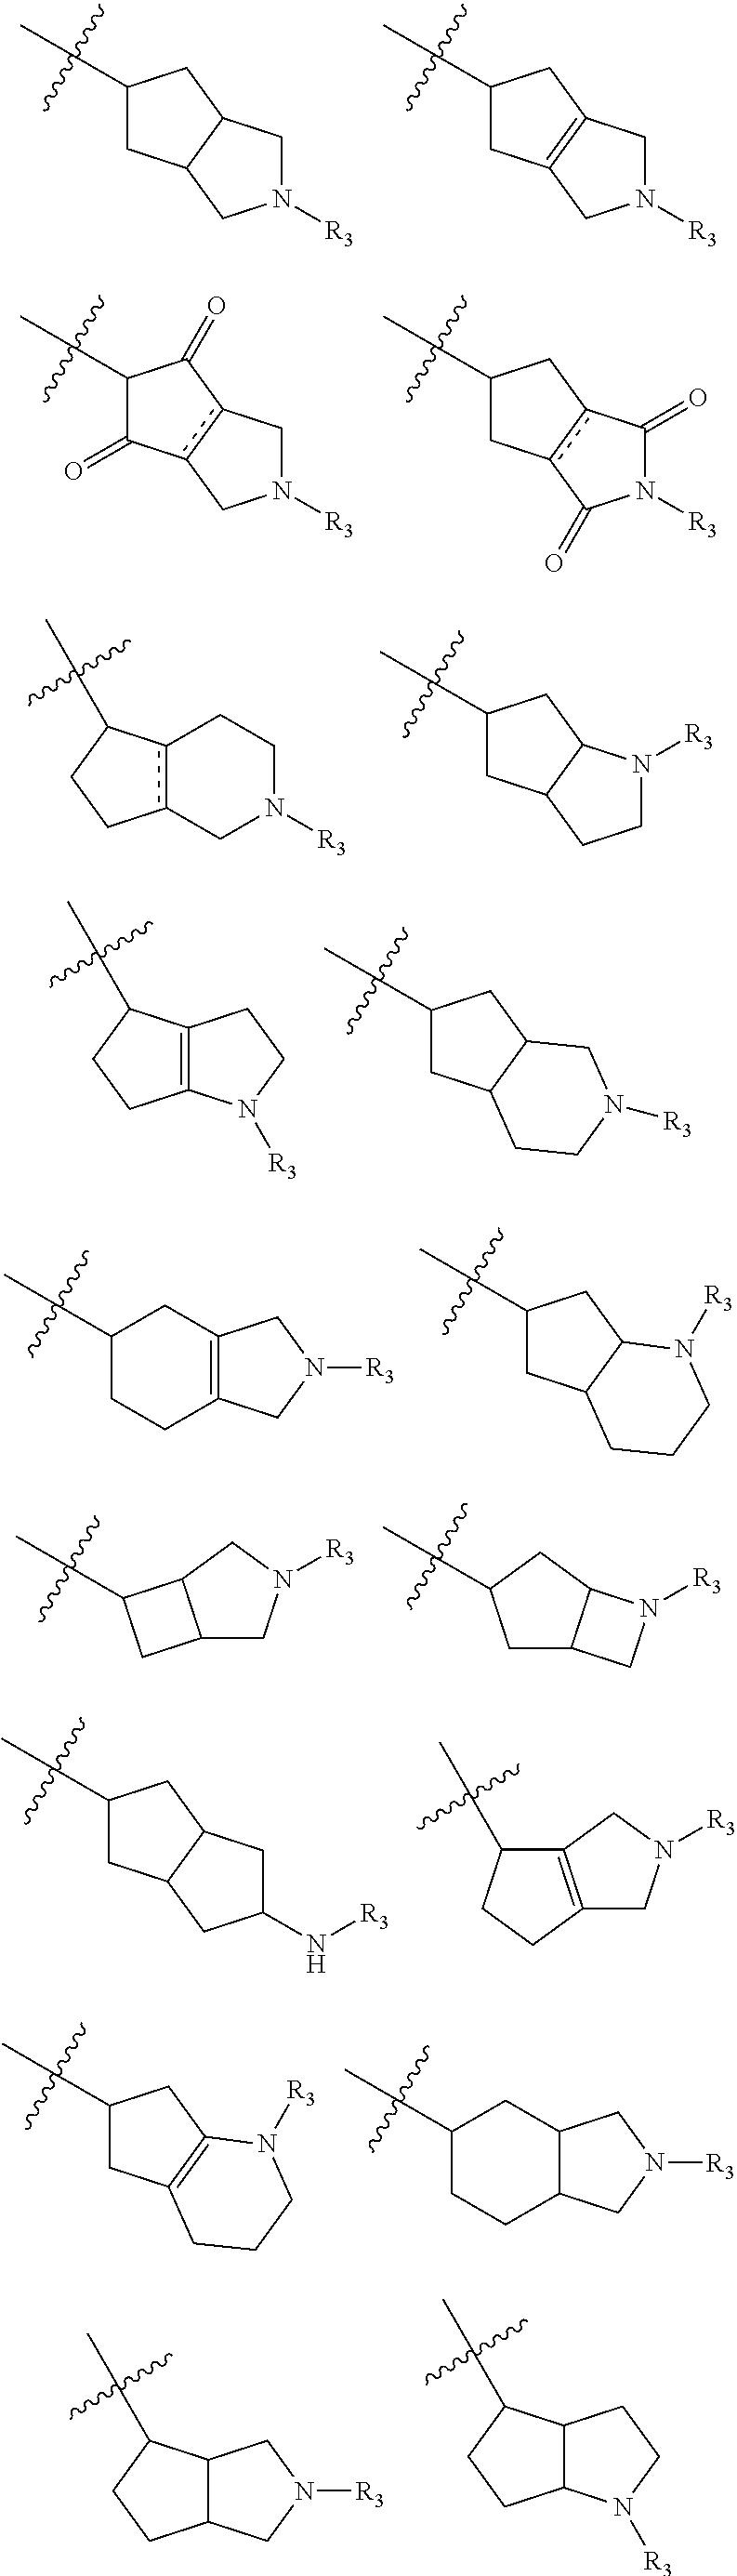 Novel heterocyclic compounds